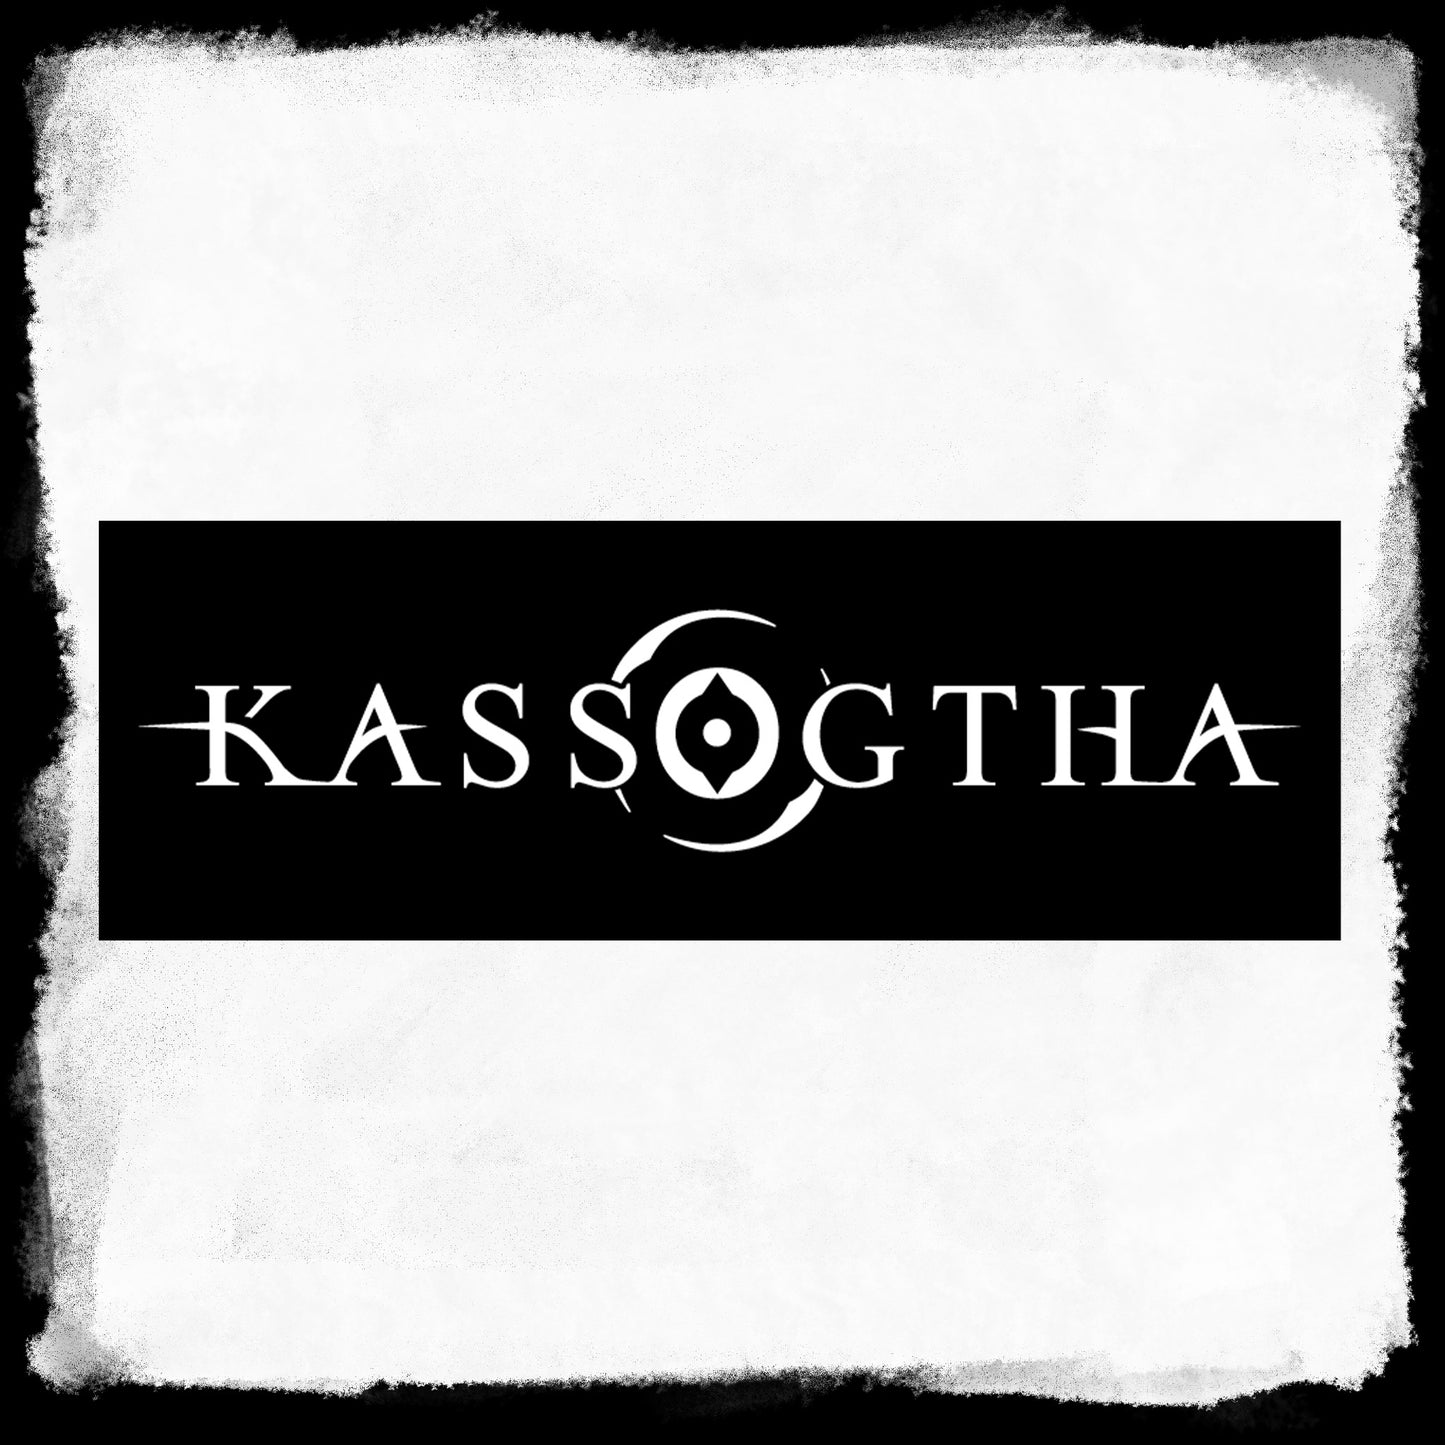 Kassogtha logo Sticker